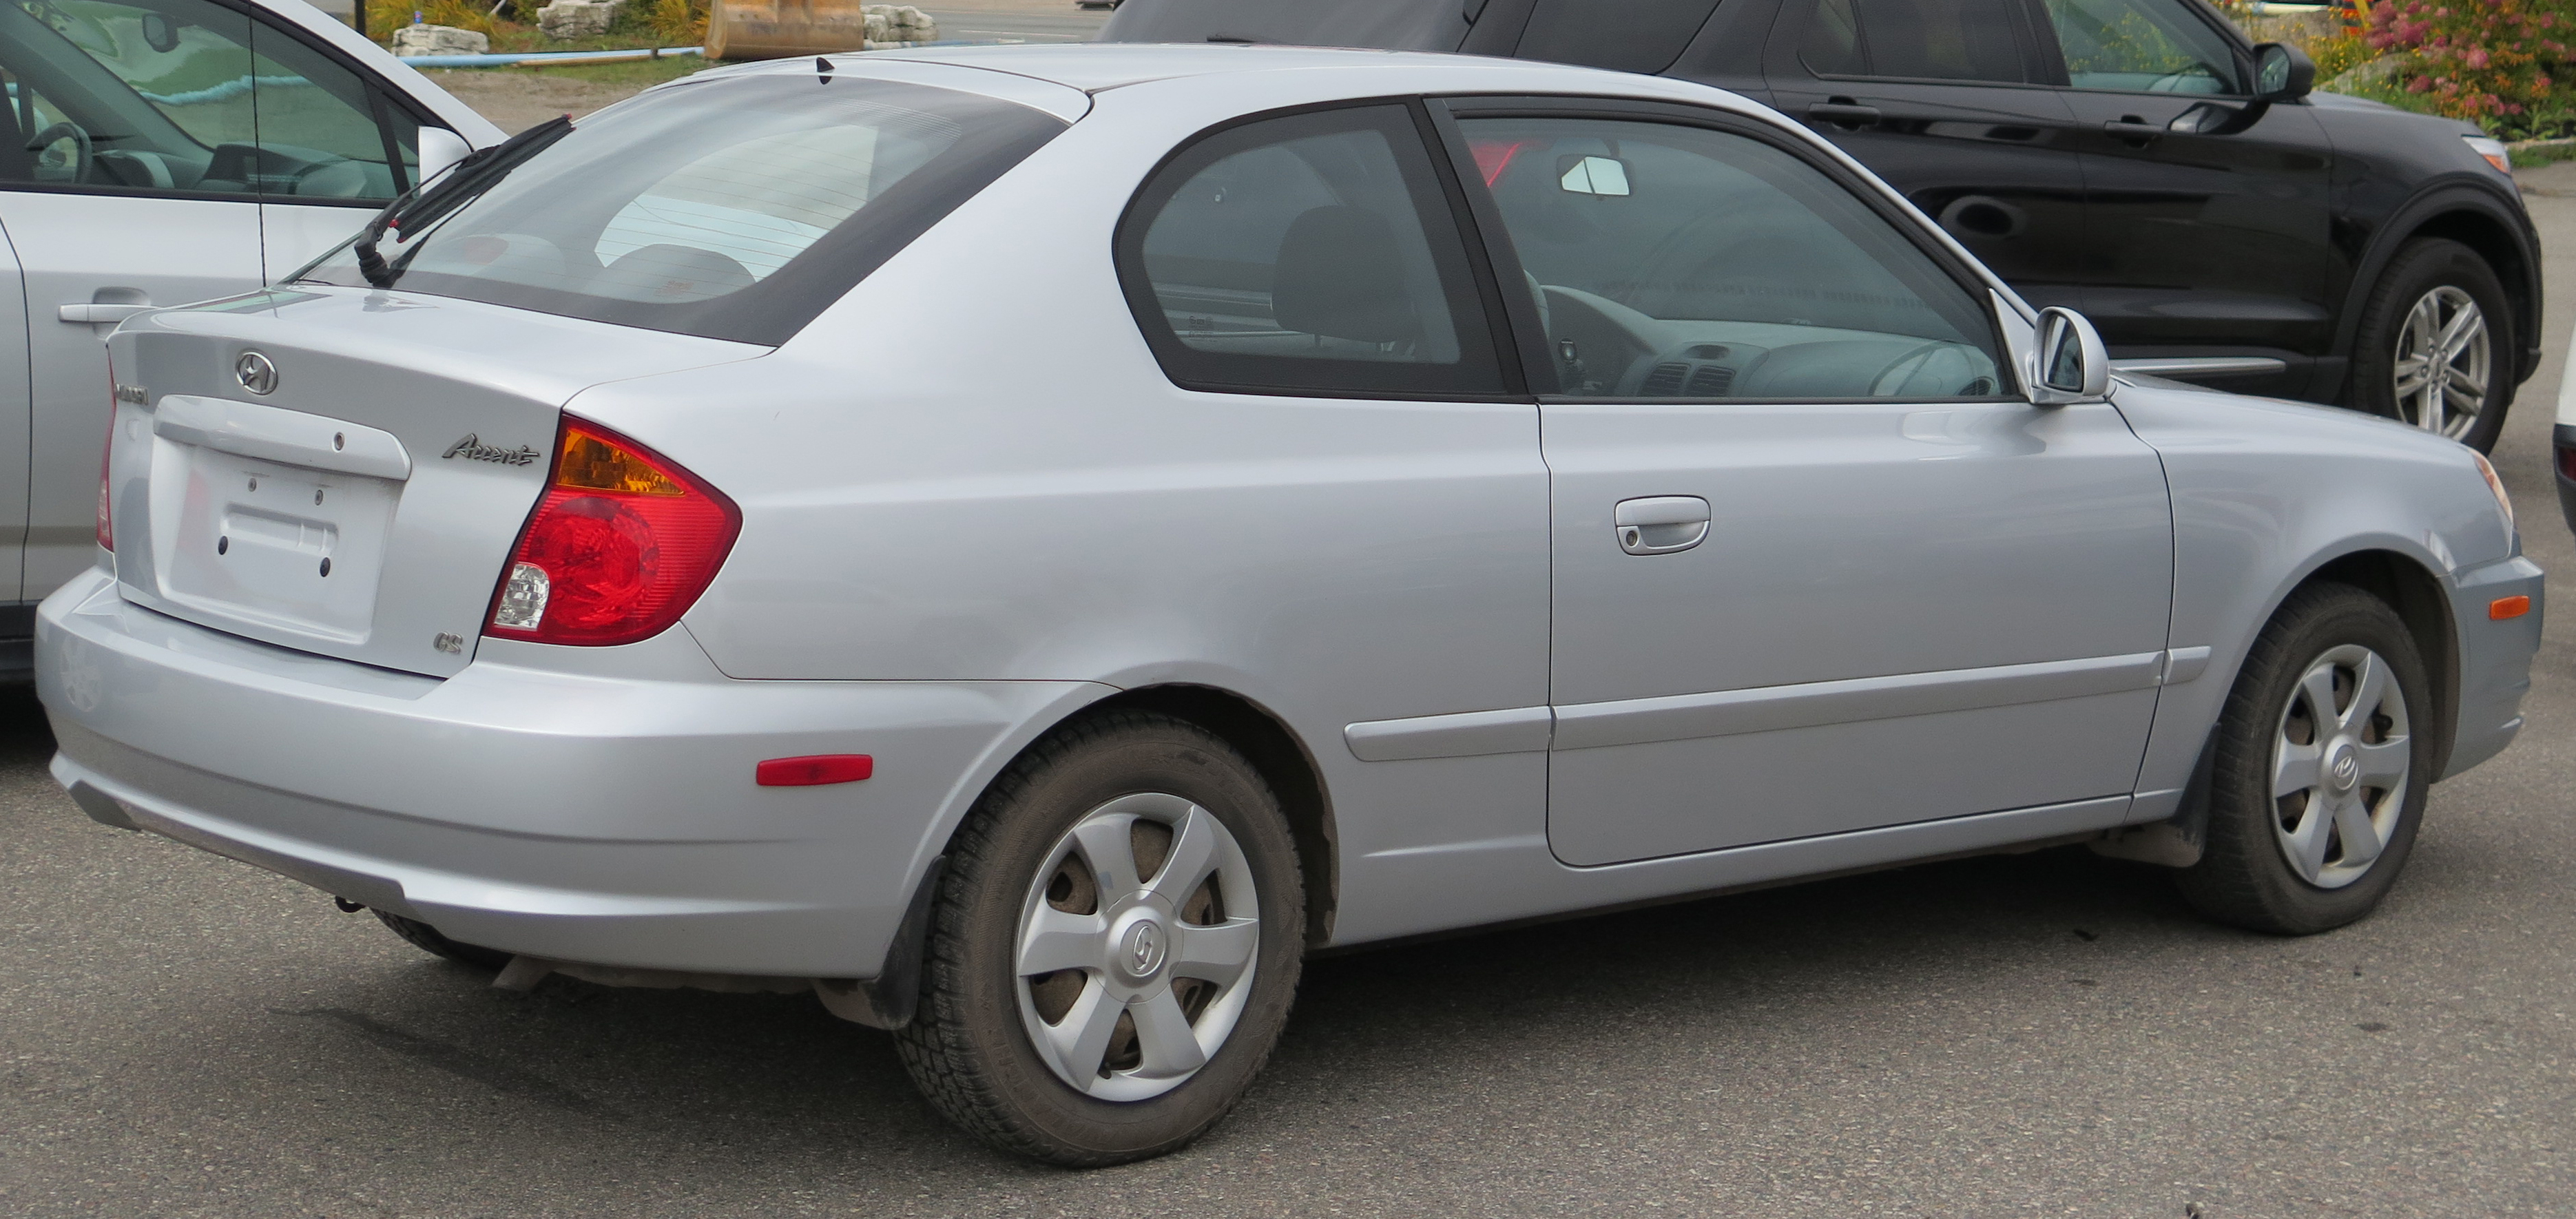 File:2006 Hyundai Accent GS hatchback in Clean Silver Metallic, Rear  Right.jpg - Wikipedia